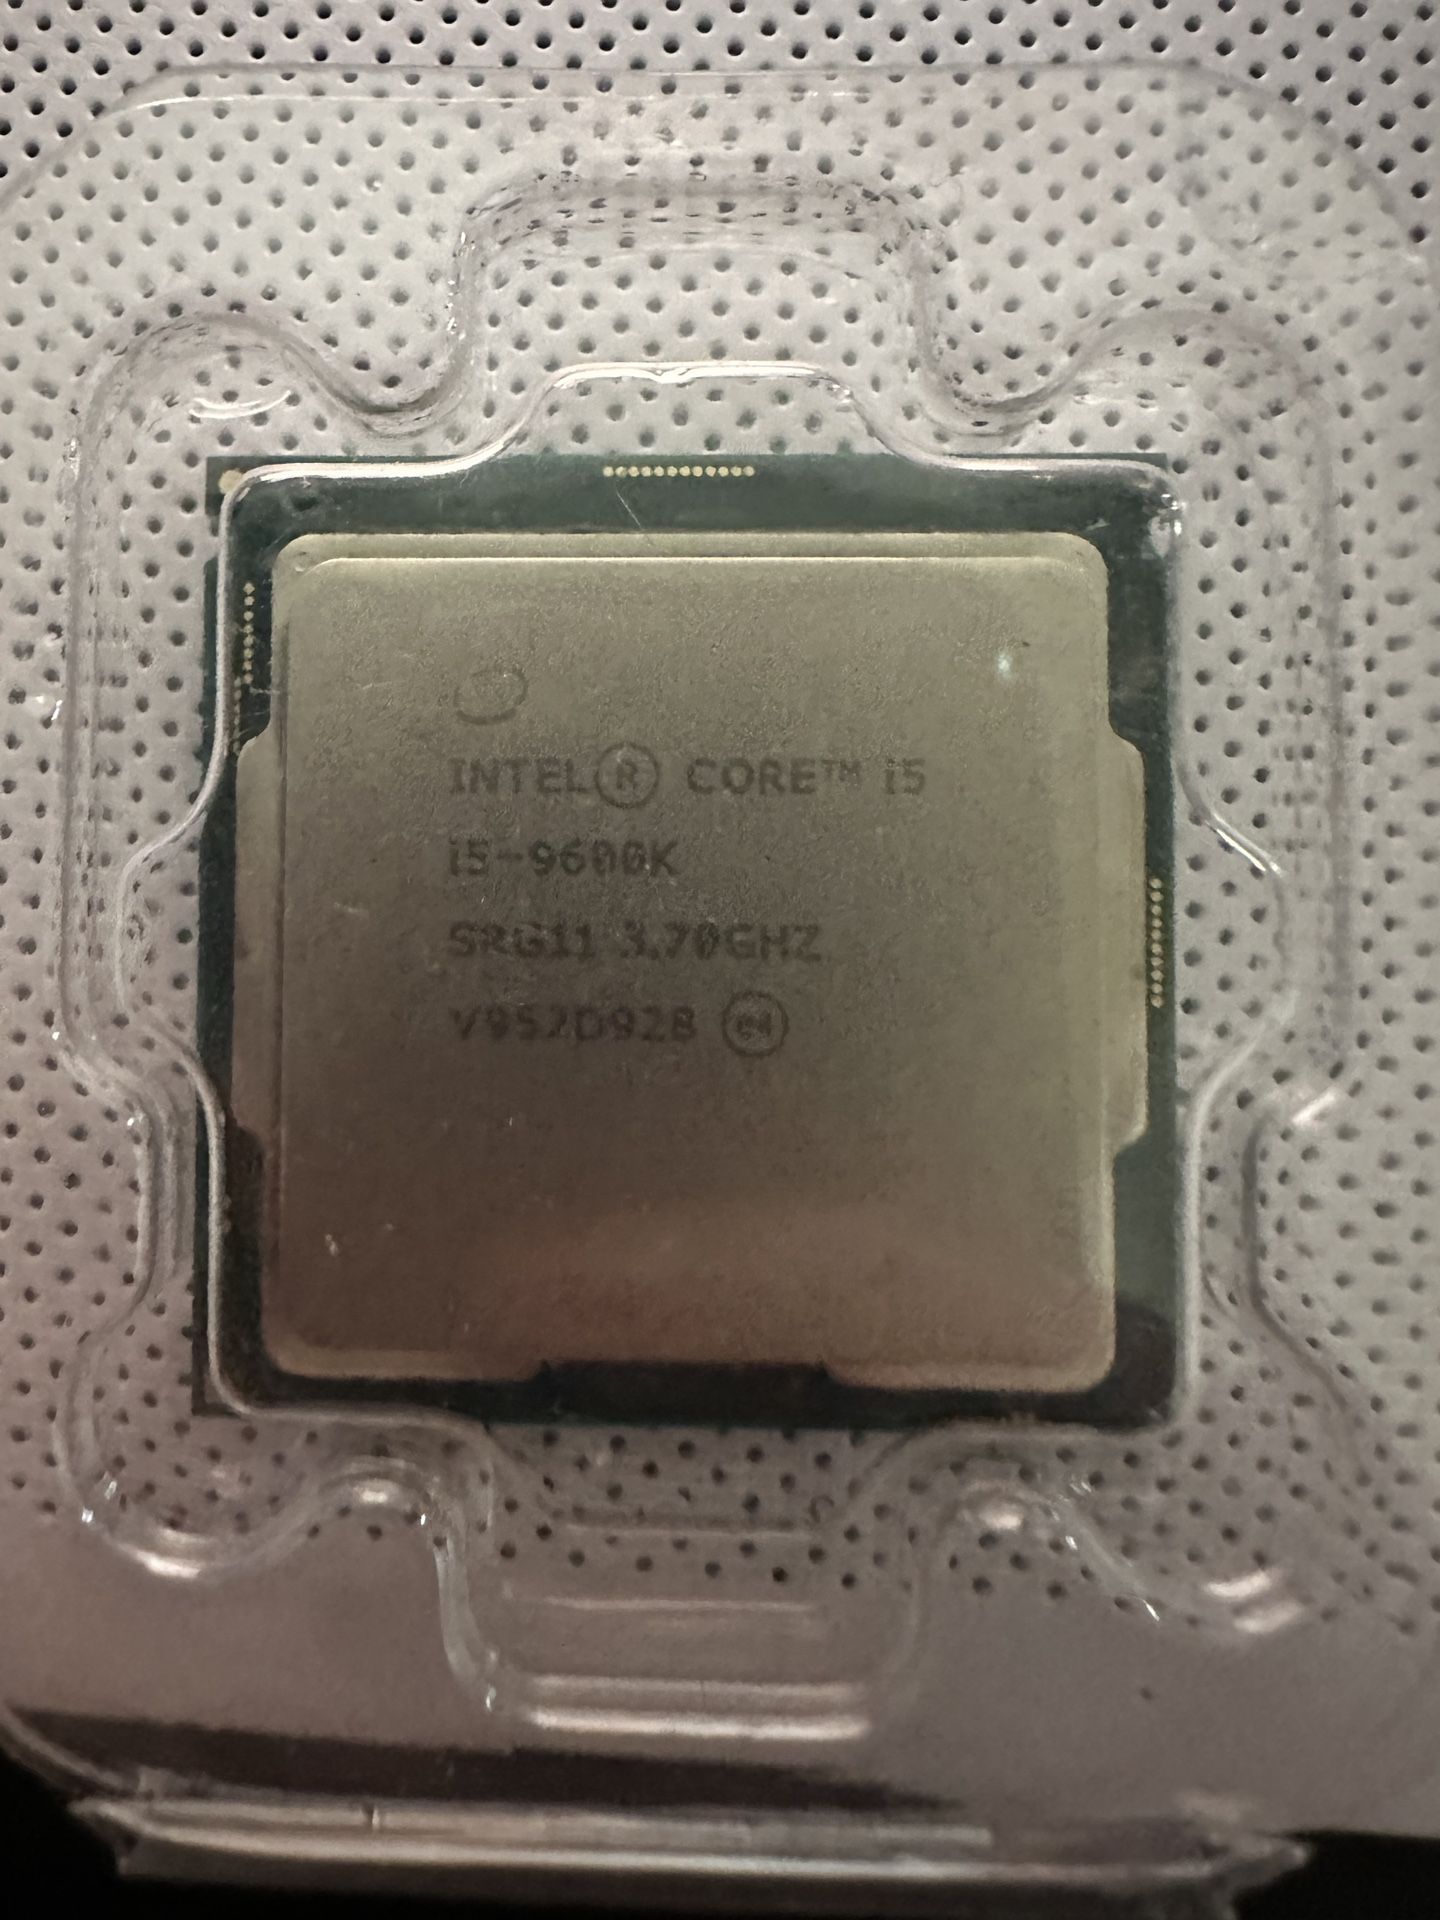 Intel i5-9600k Processor